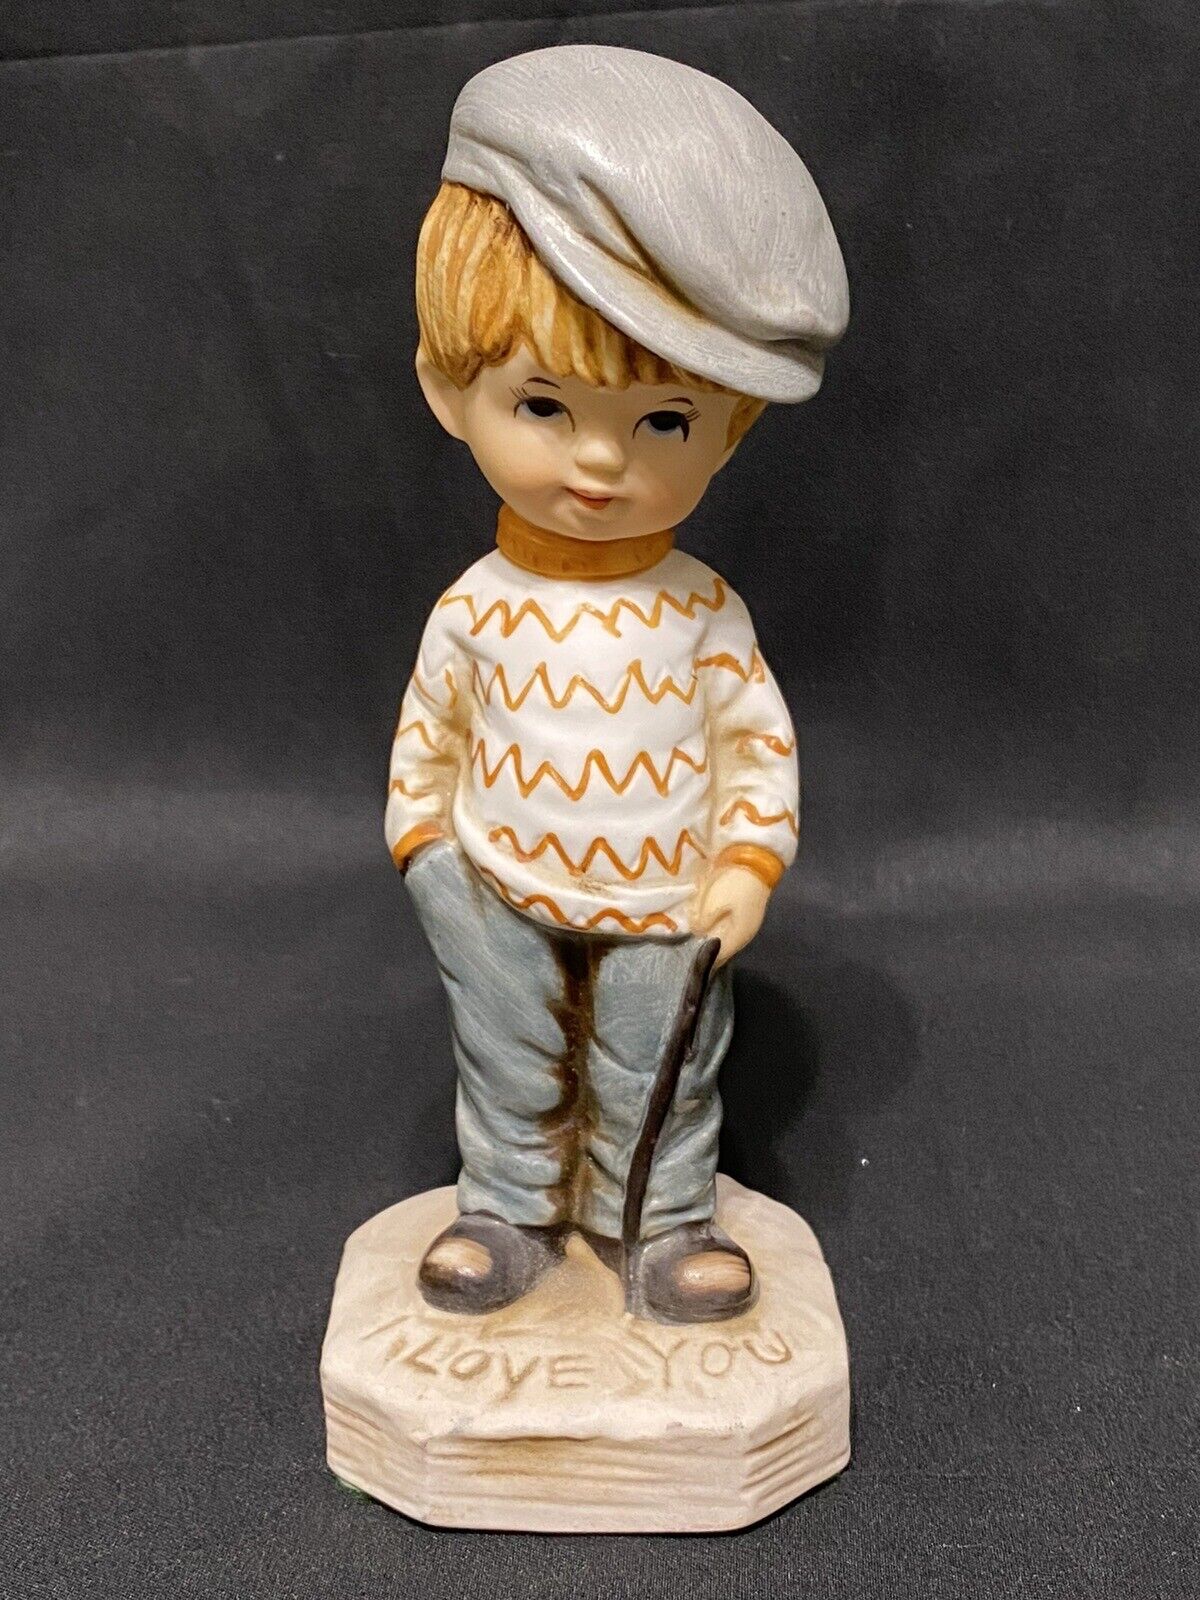 Vintage 1971 Gorham Moppets 6” Boy In Hat “ I Love You” Figurine Statue